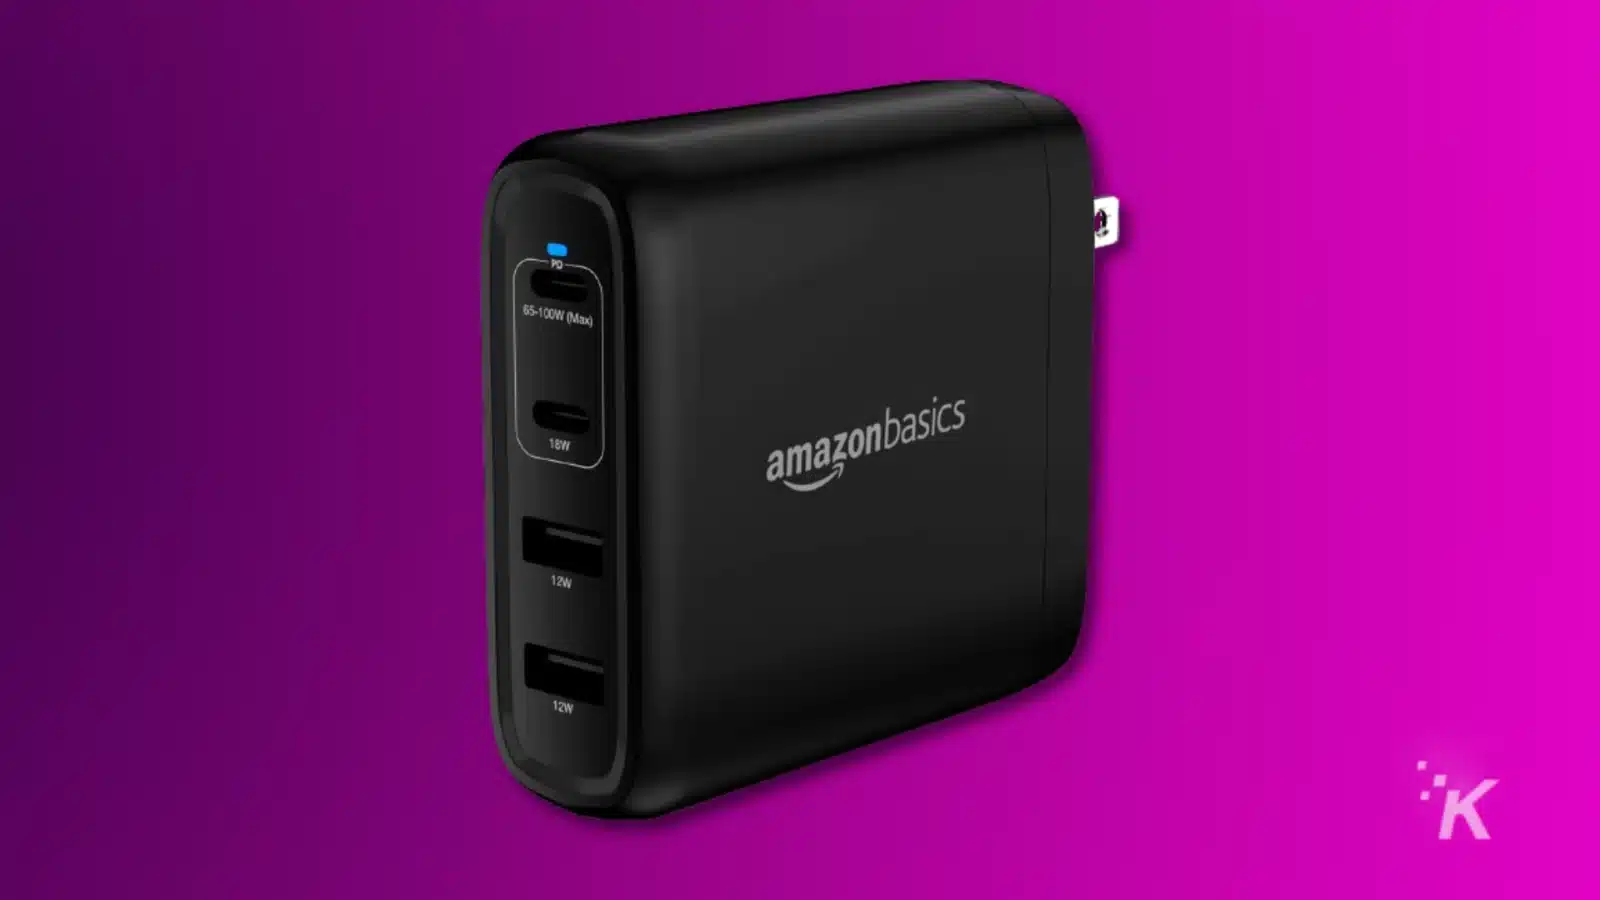 Amazonbasics 100w usb-c charger on a purple background